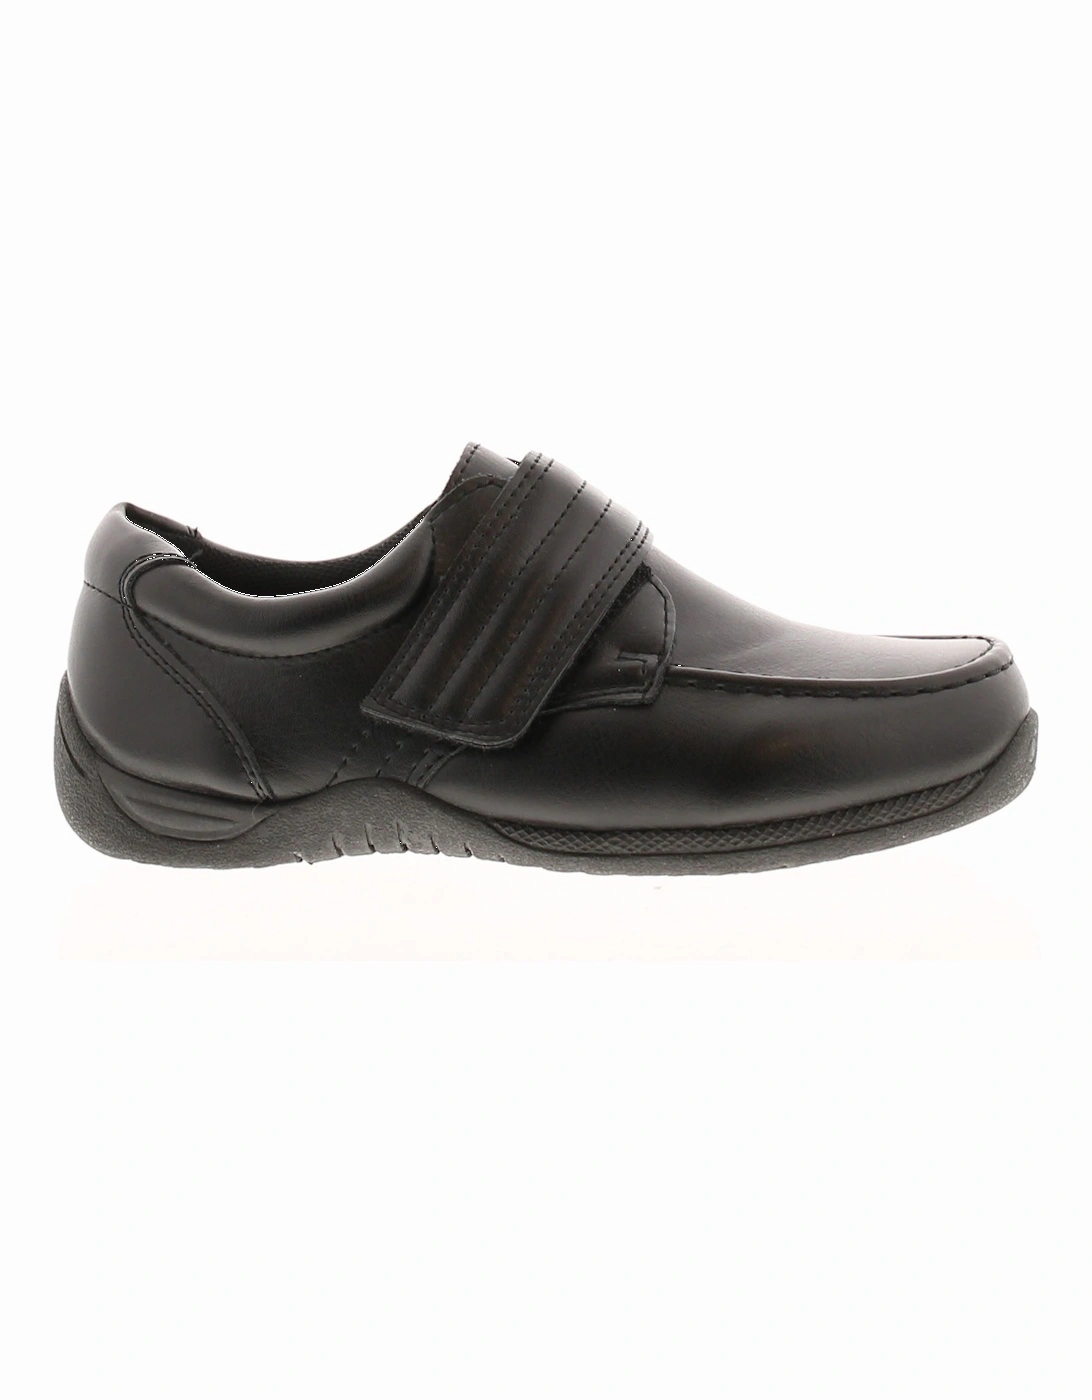 Boys Black School Shoes  Trainers kanye jnr black UK Size